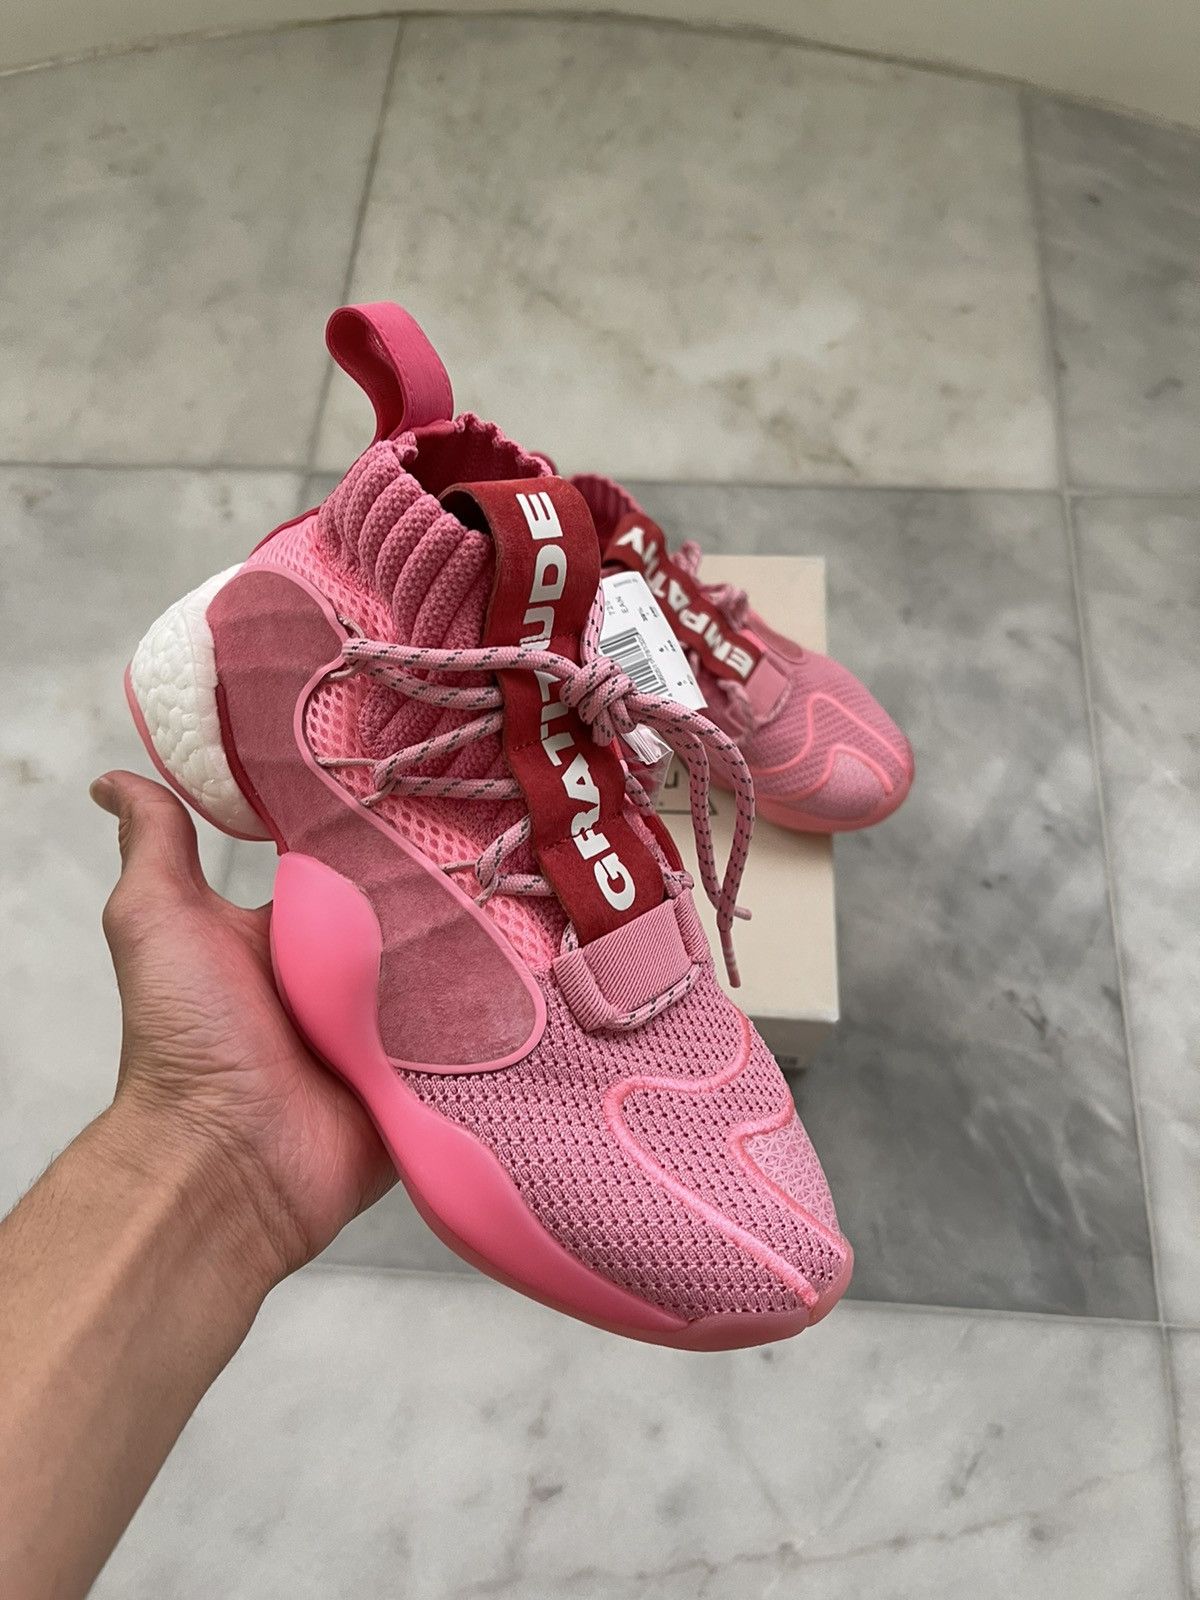 Adidas Pharrell x Crazy BYW X Hyper Pink 2019 Size US 6.5 / EU 39-40 - 2 Preview